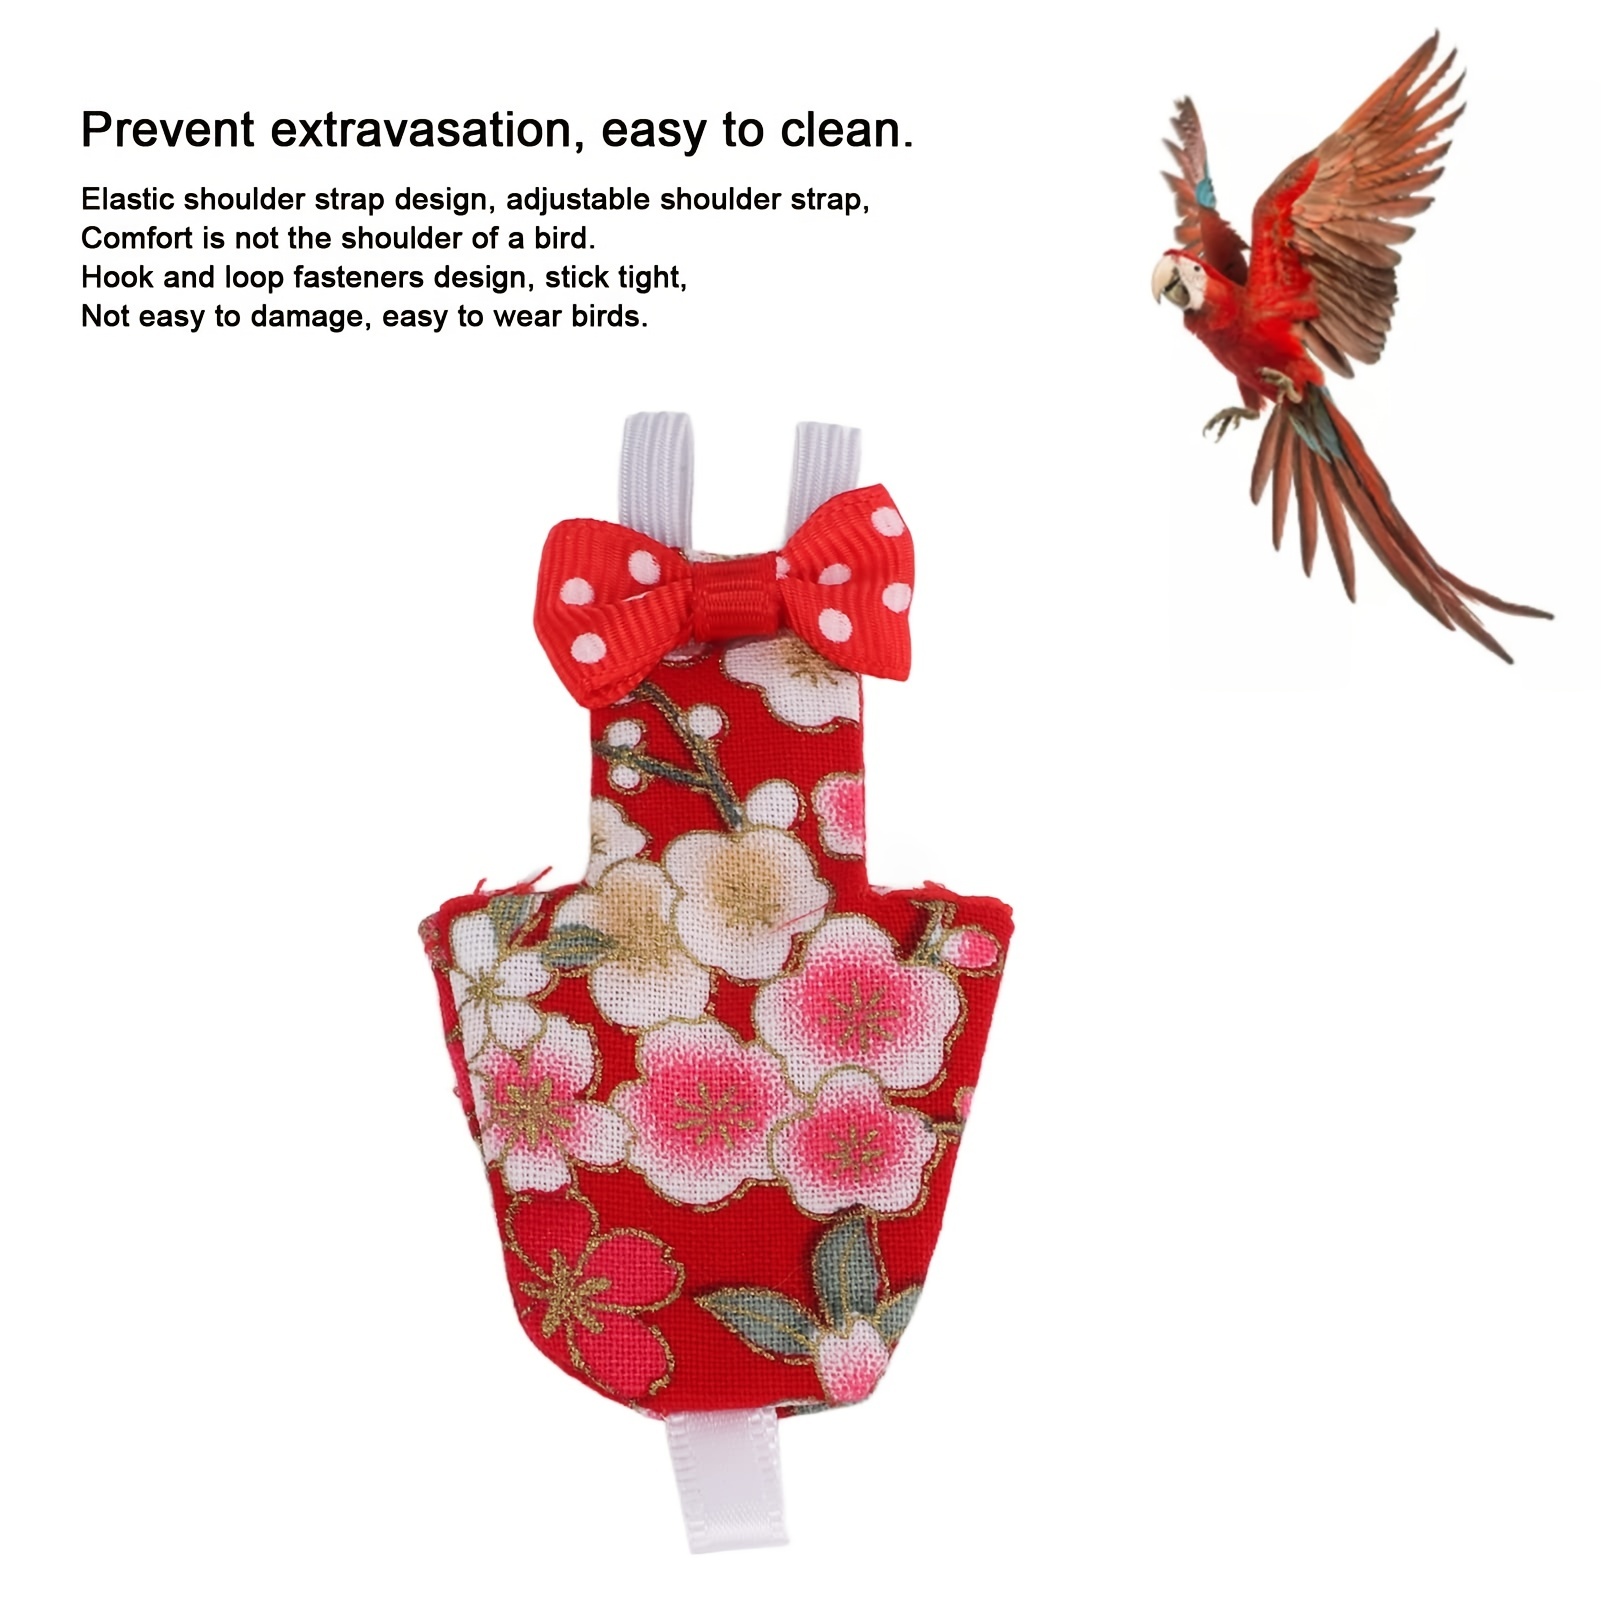 DIY easy sewn parrot (bird) costume